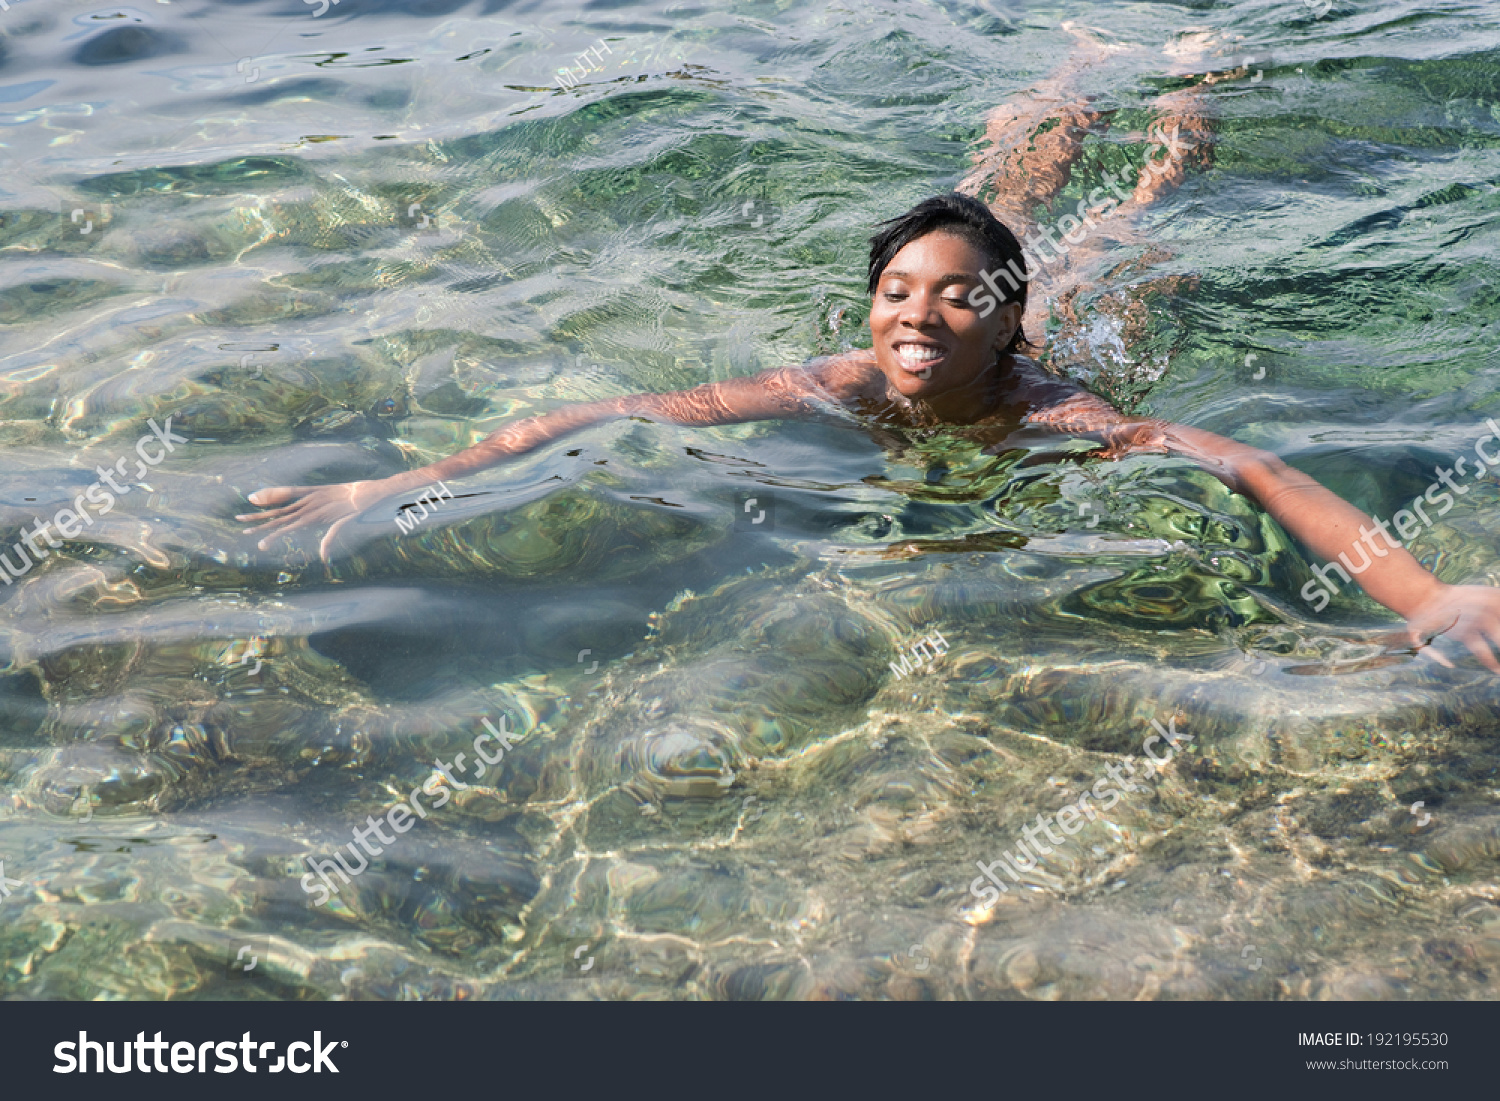 Pics of black women swimming naked